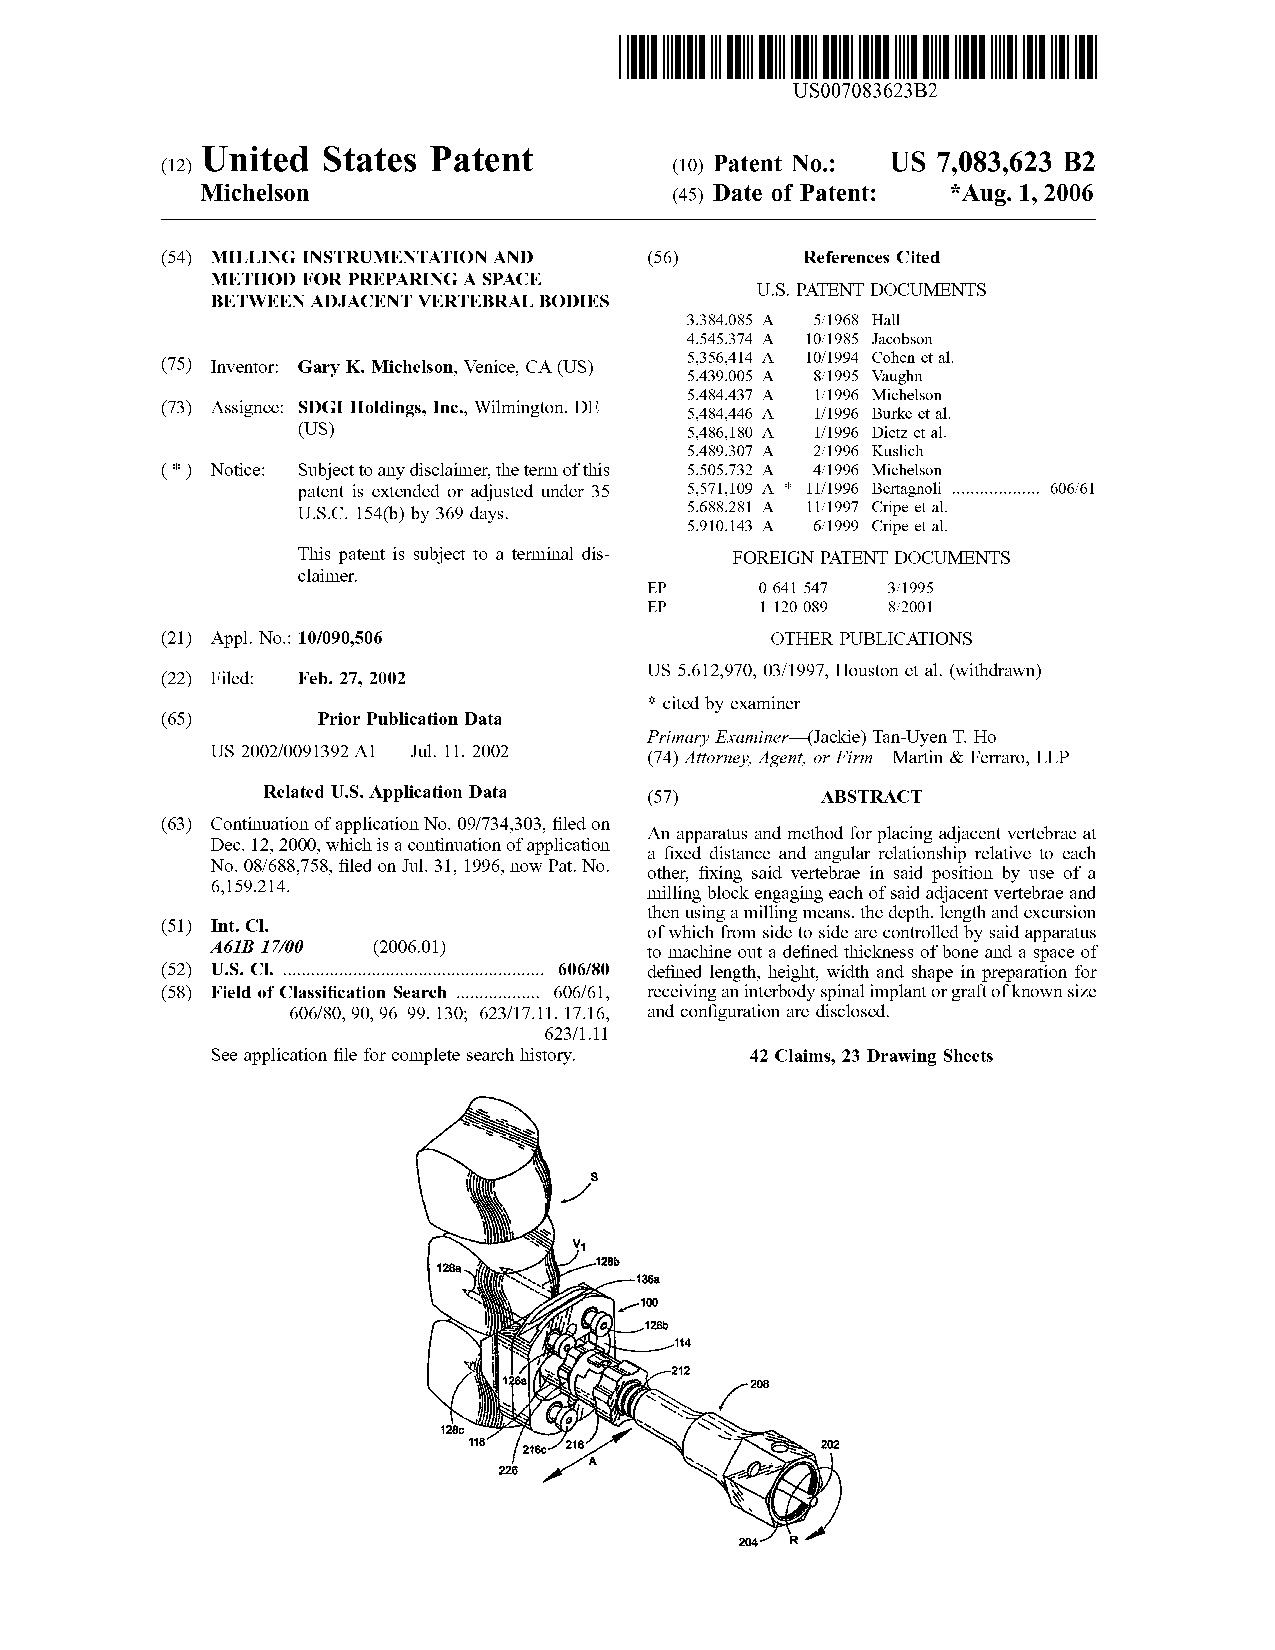 Milling instrumentation and method for preparing a space between adjacent     vertebral bodies - Patent 7,083,623